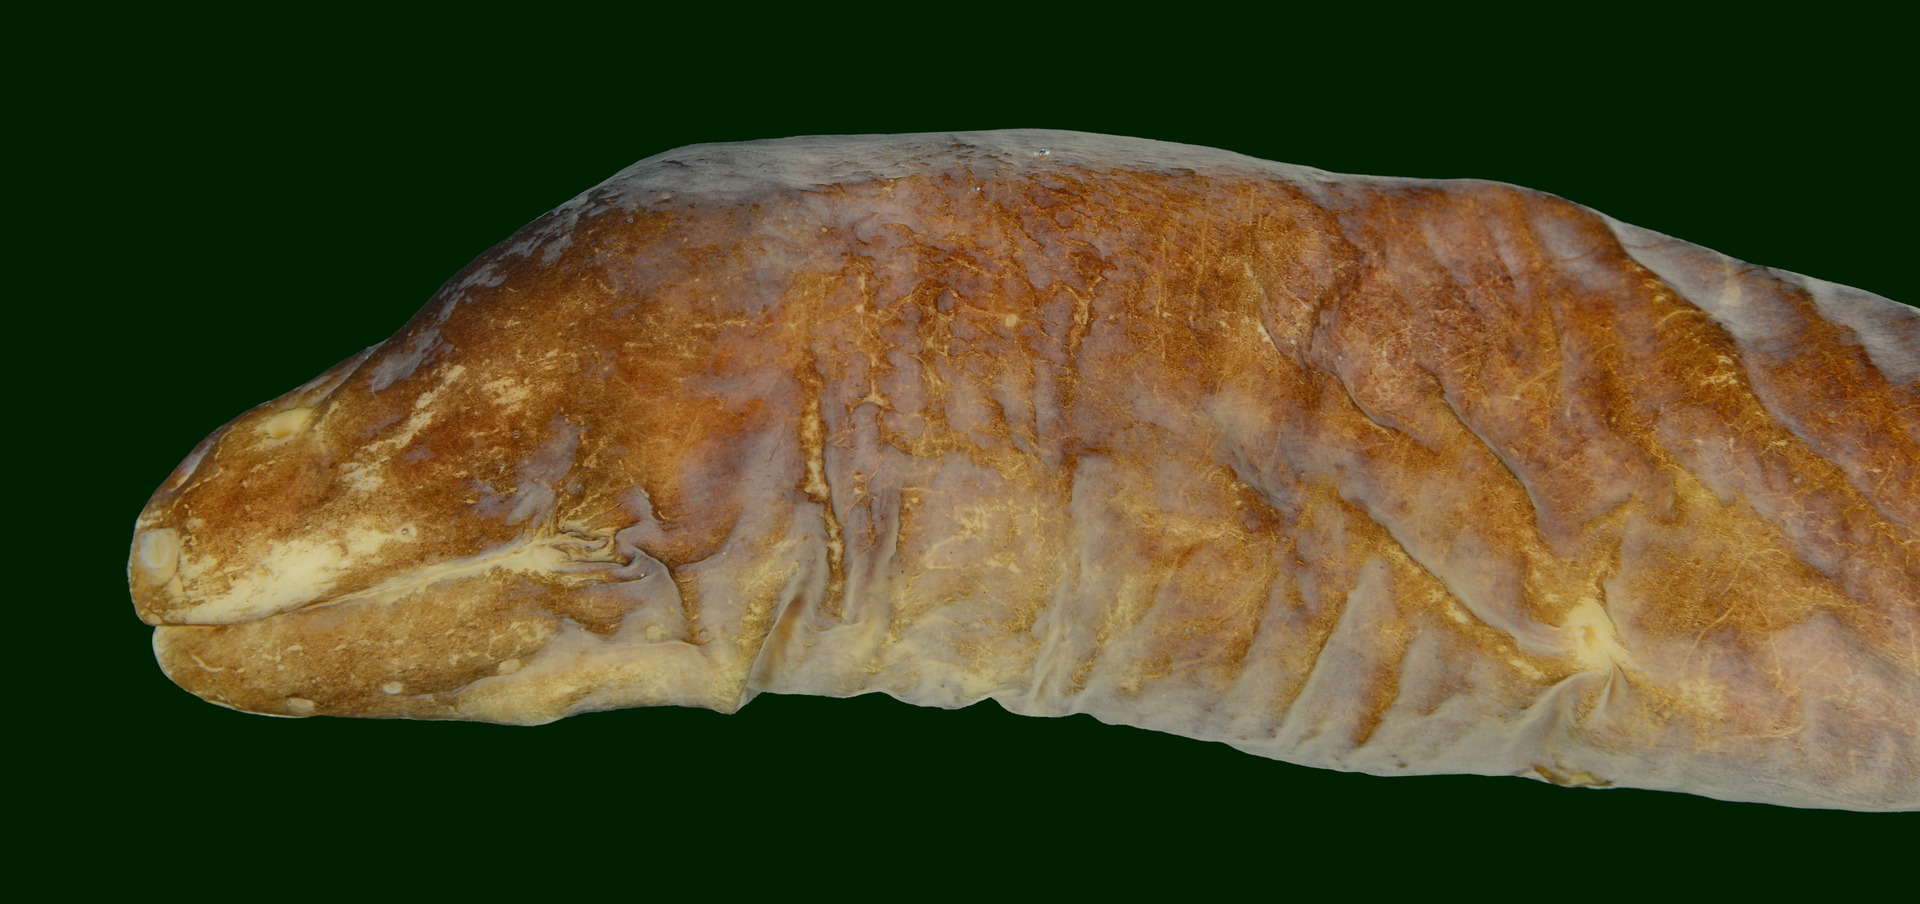 The specimen of "Bean-eyed snake moray" (Uropterygius cyamommatus) had no left eye.